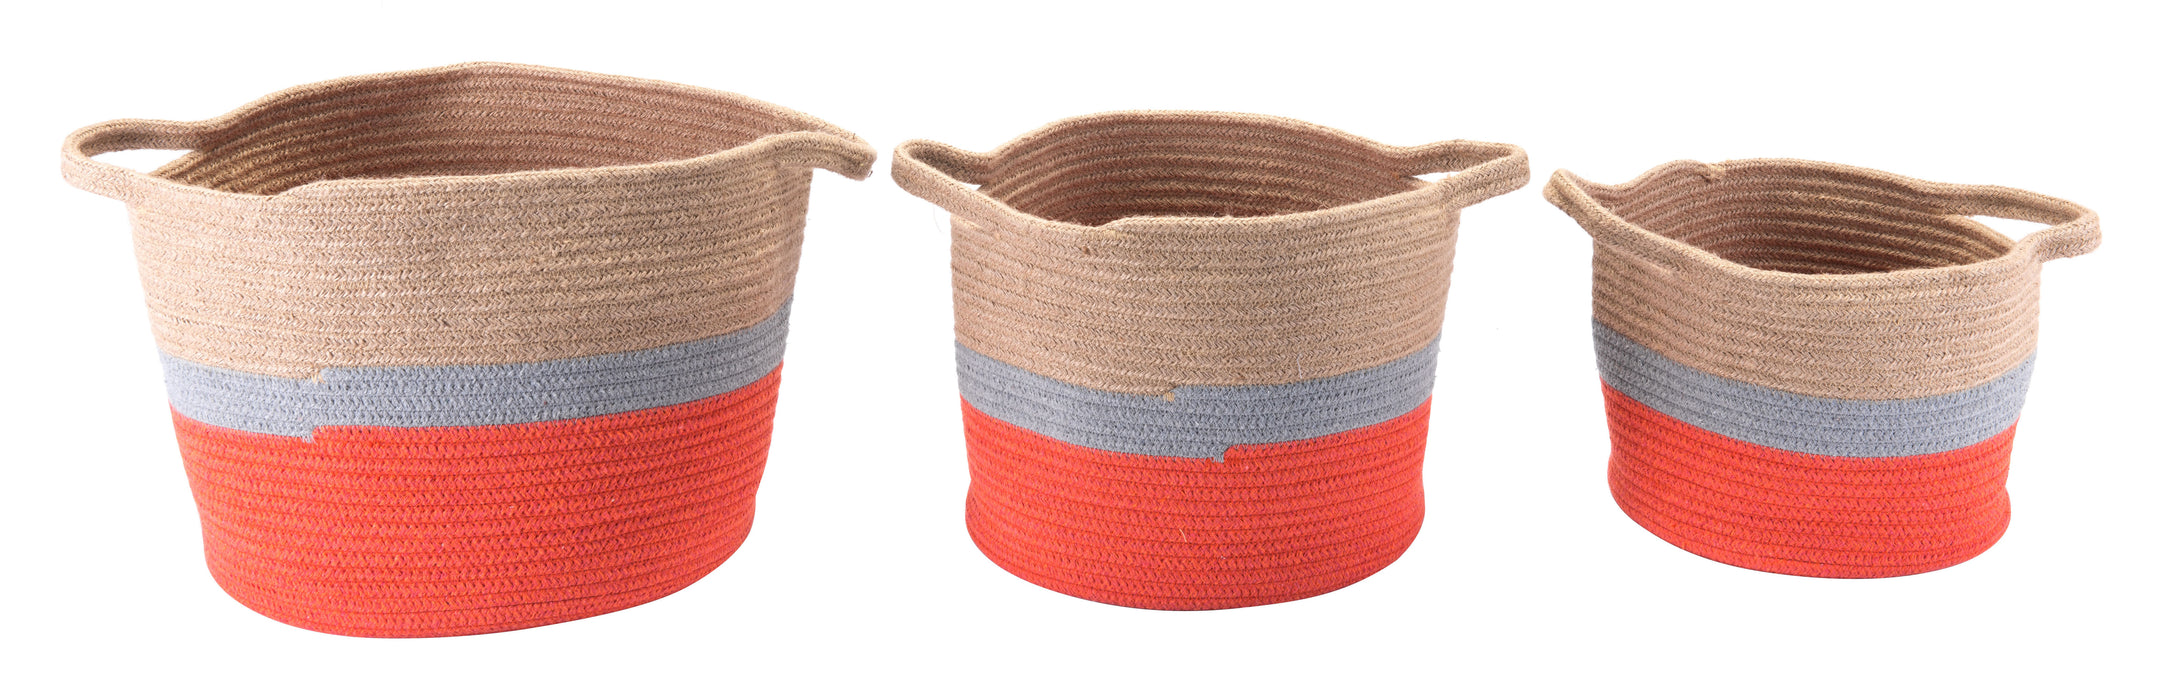 Ilesa Set Of 3 Baskets With Handles Multicolor